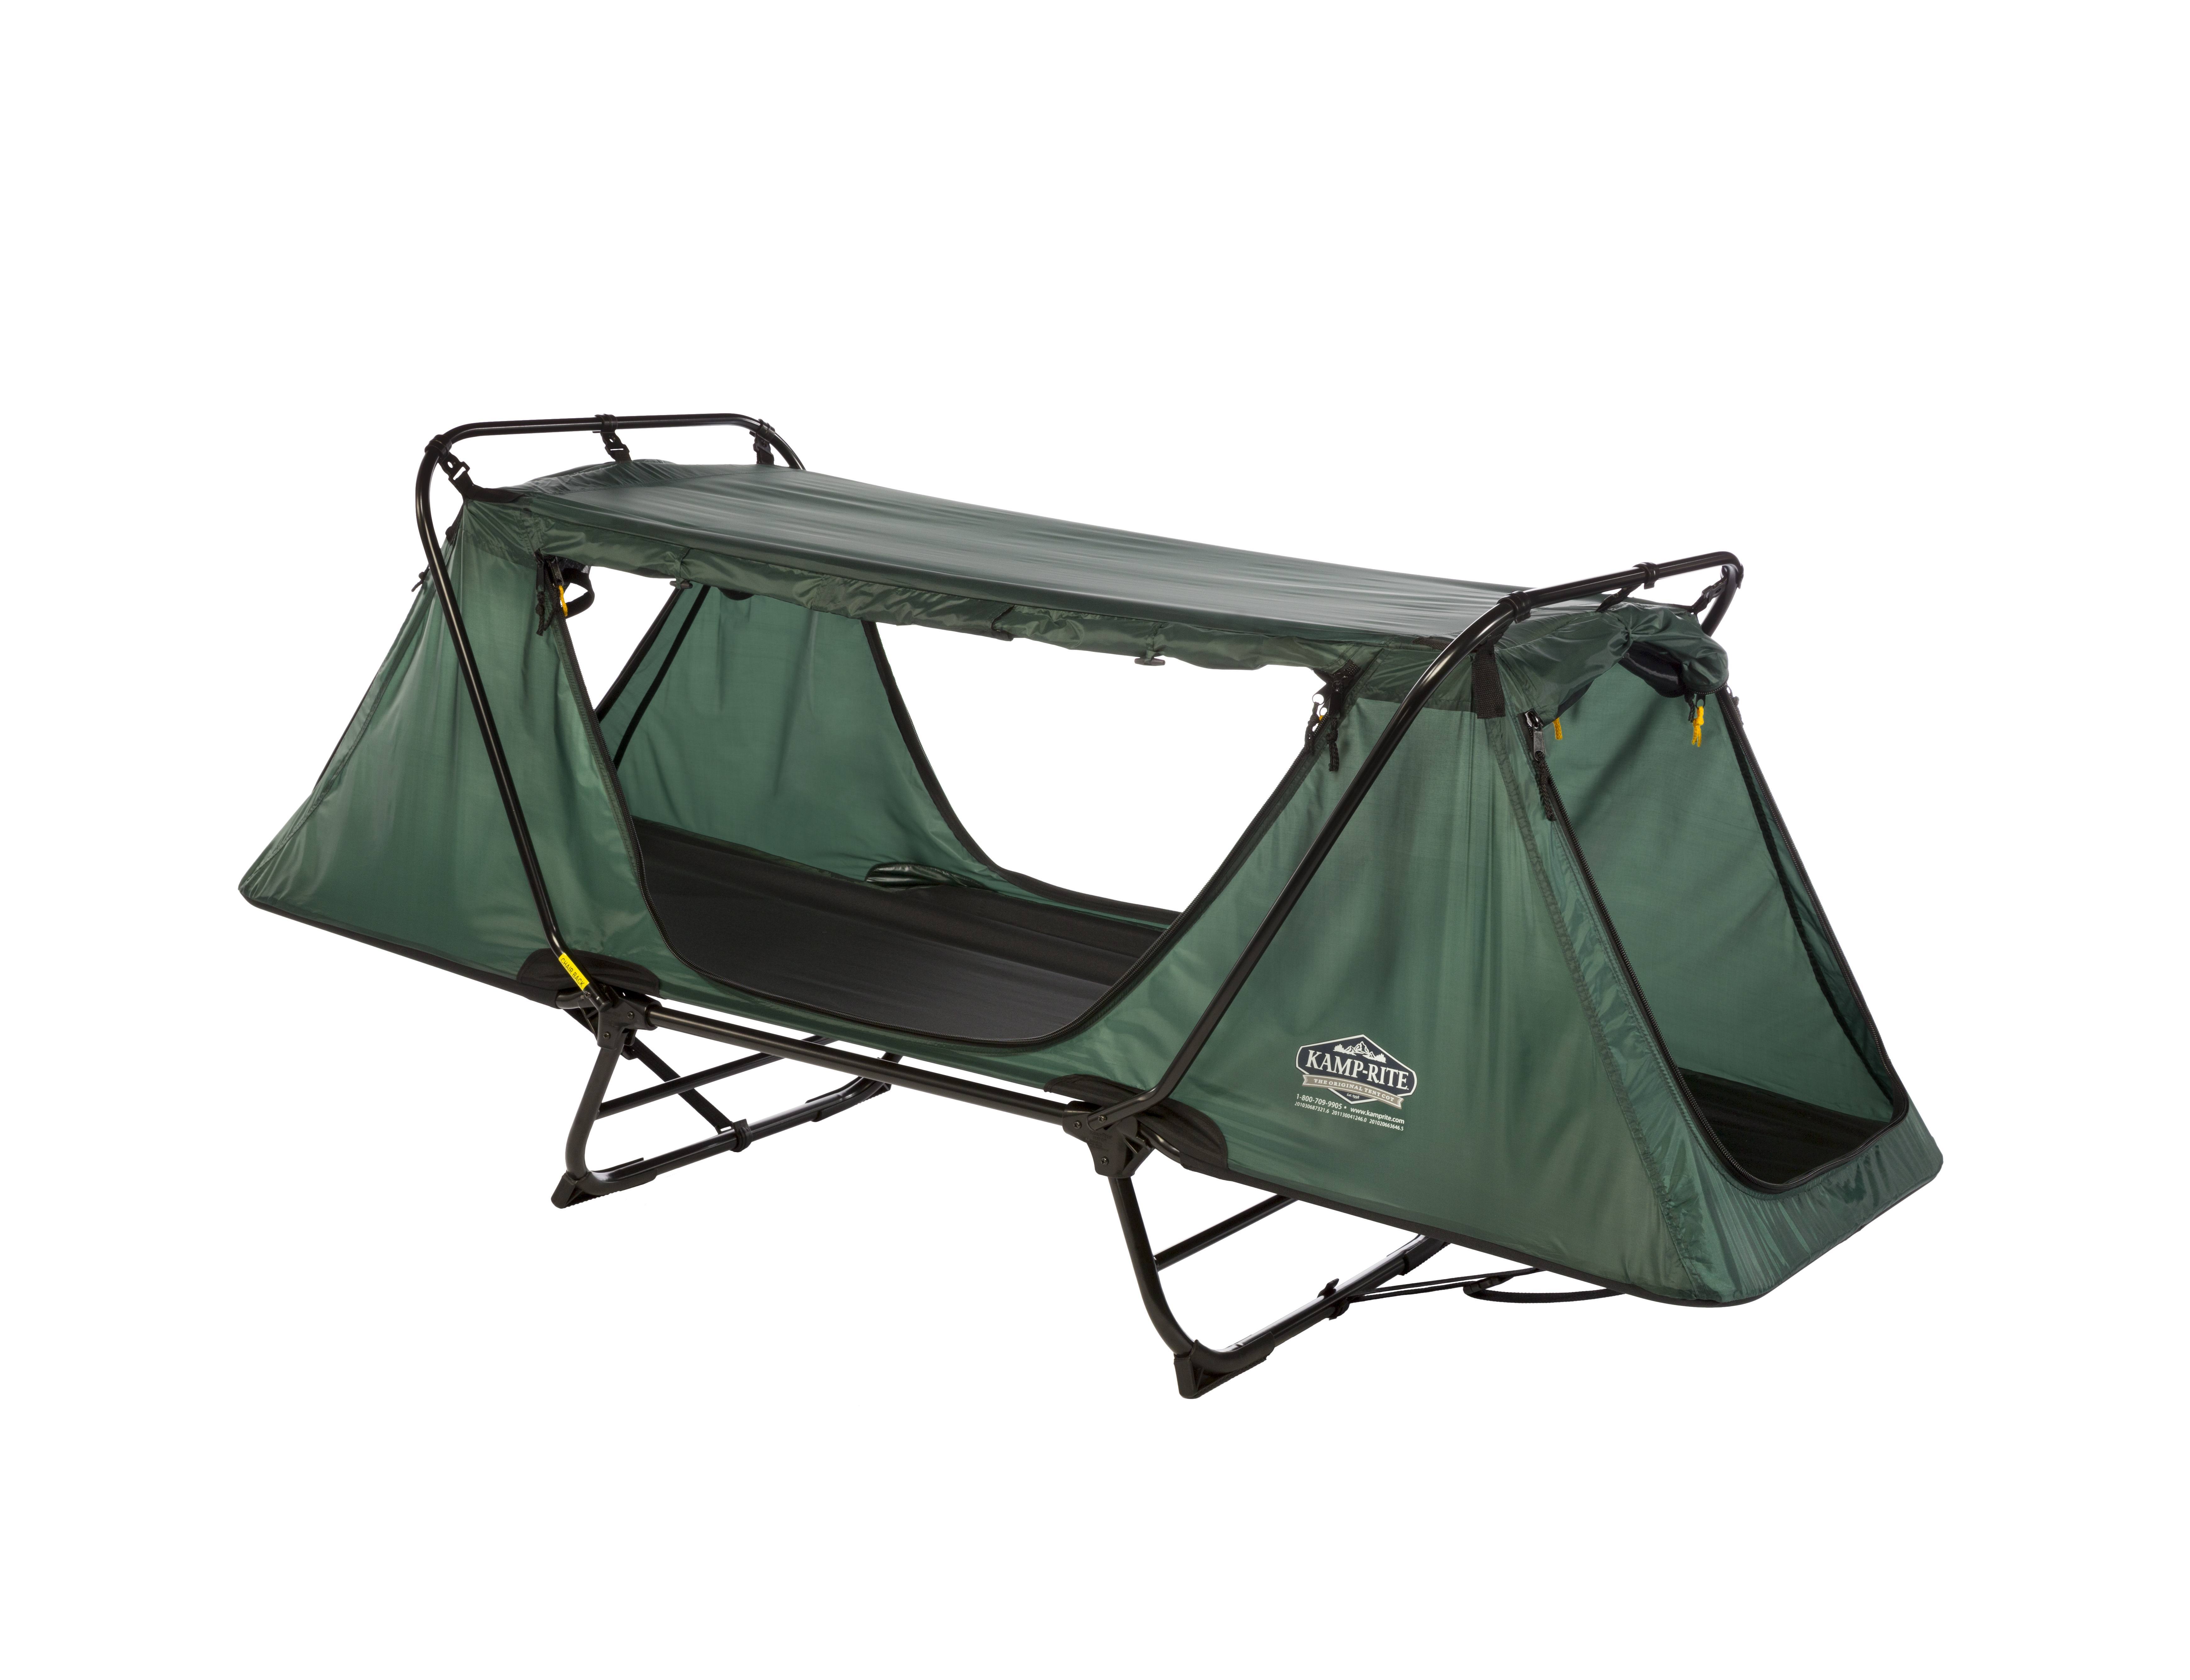 Kamp-Rite Original Tent Cot Camping Bed for 1 Person 